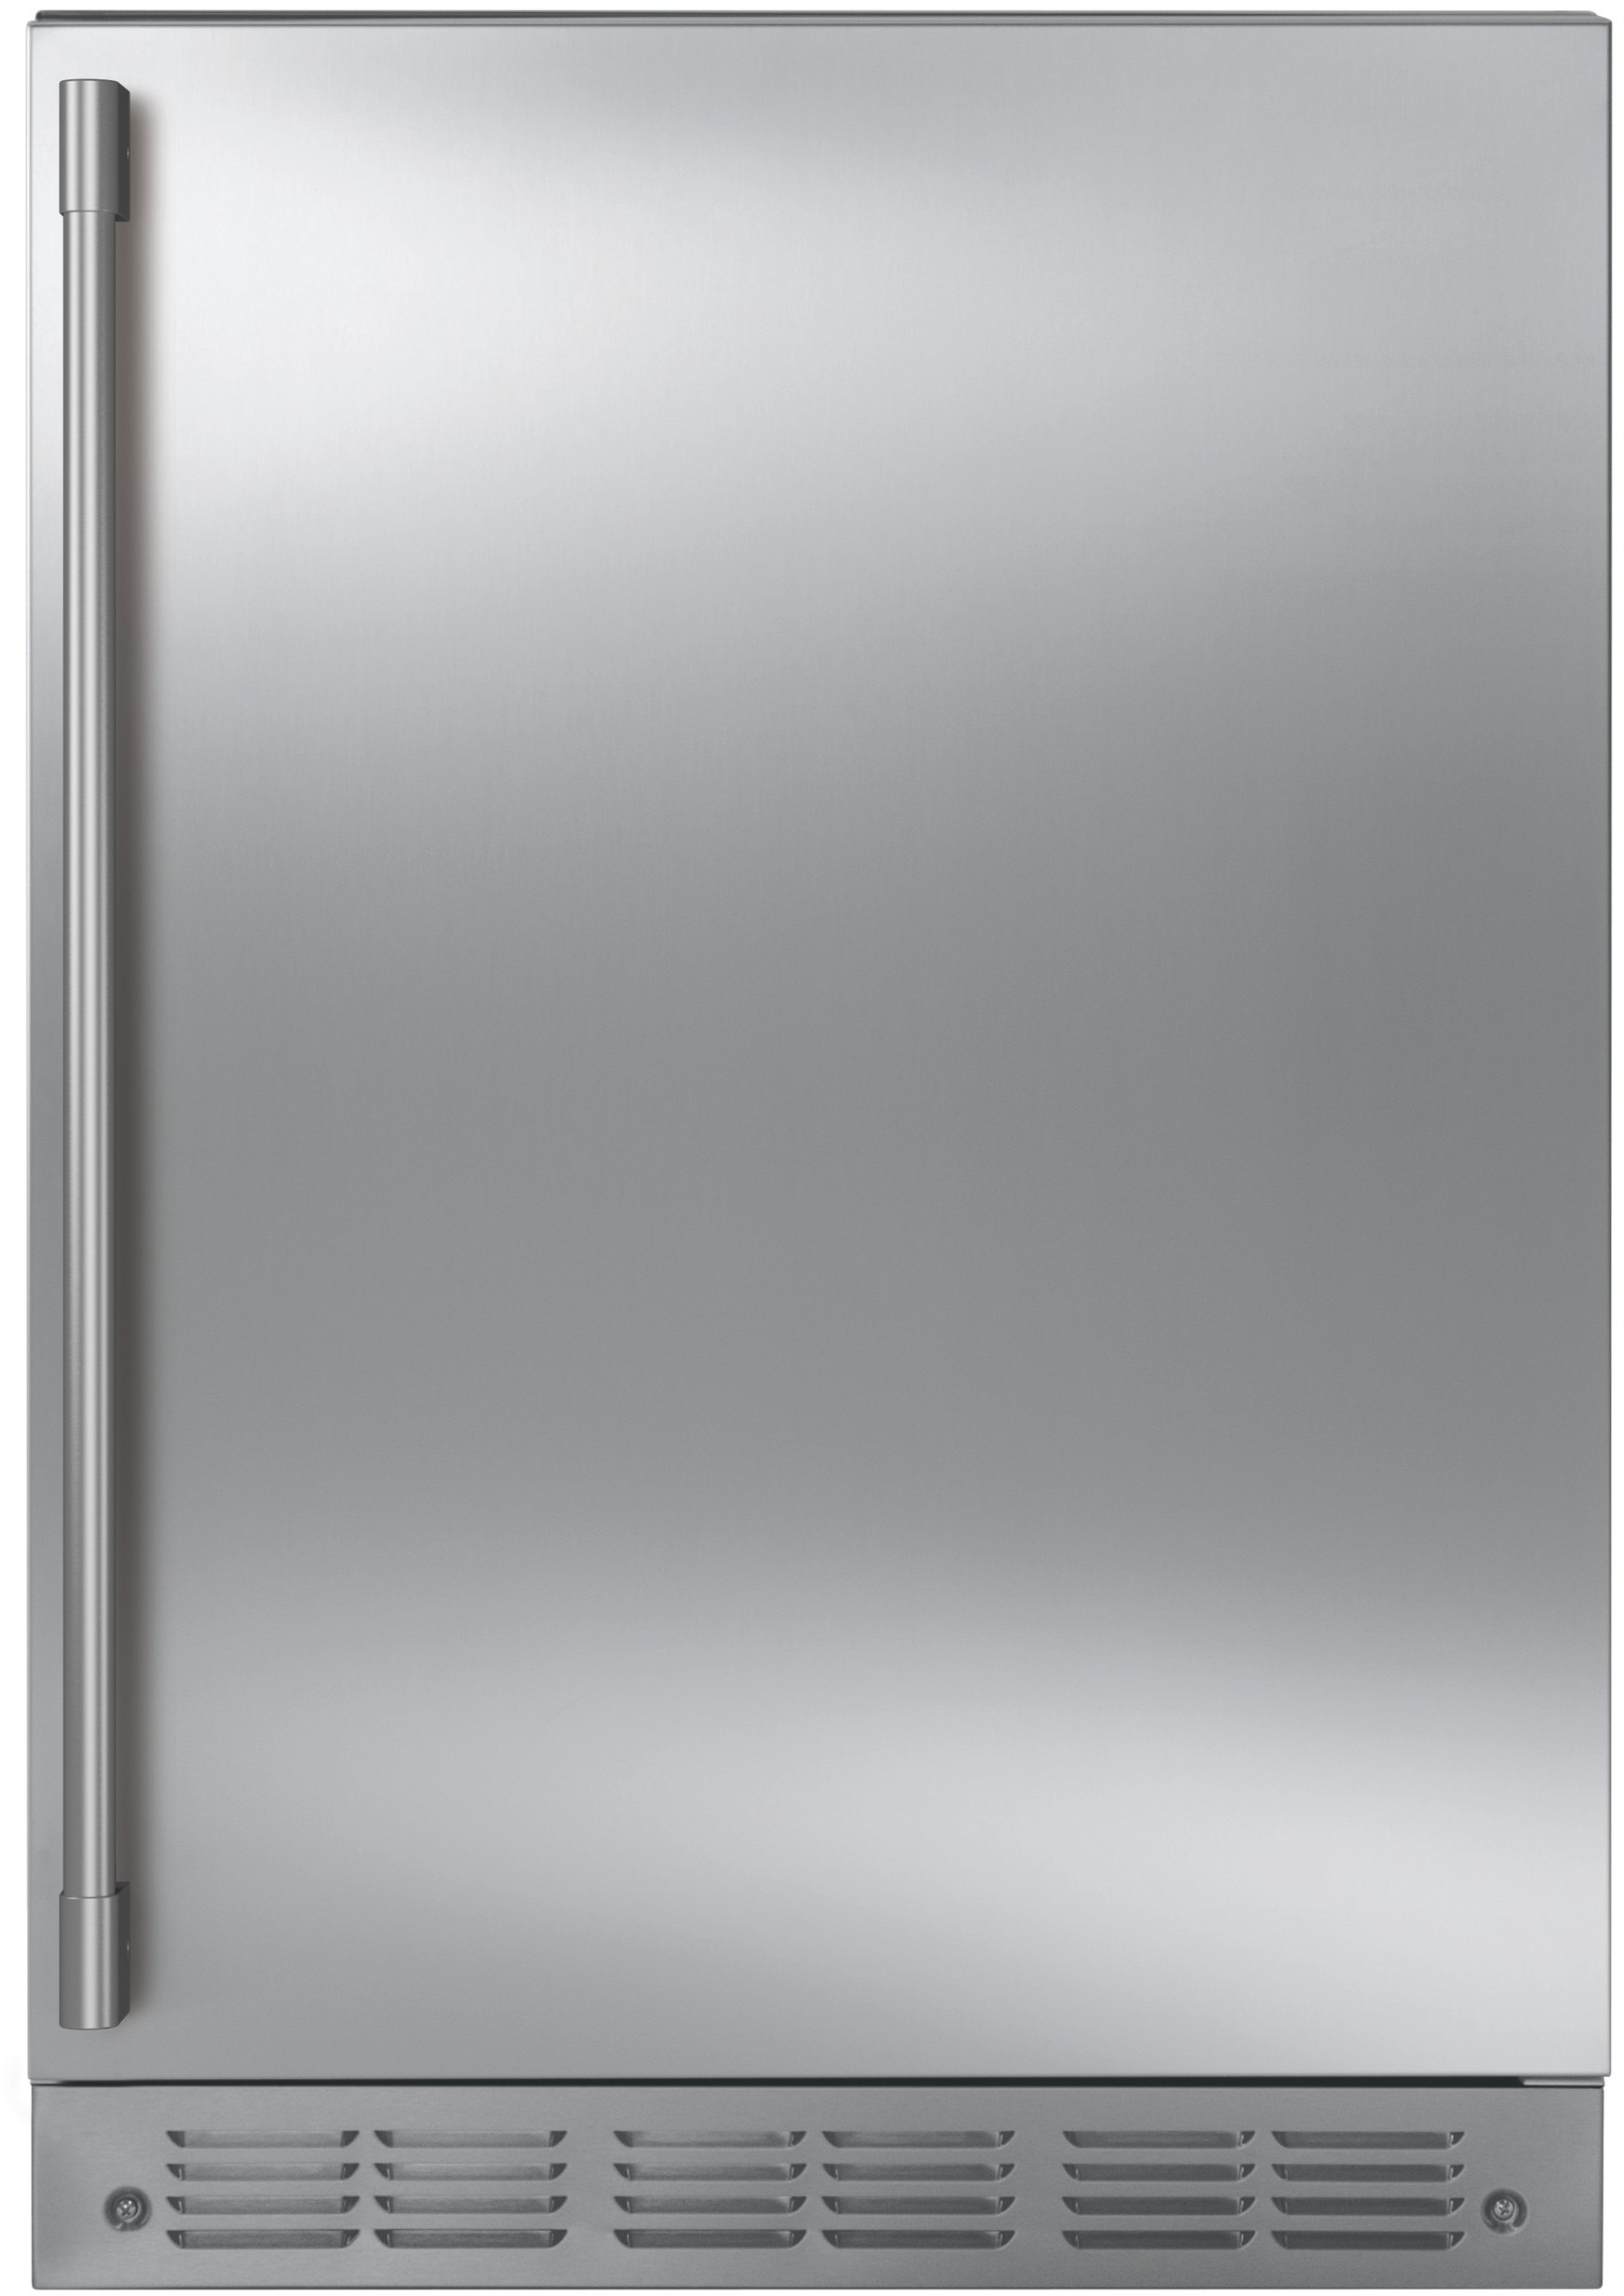 Monogram 24 Inch 24 Freestanding/Built In Undercounter Counter Depth Compact All-Refrigerator ZIFS240NSS